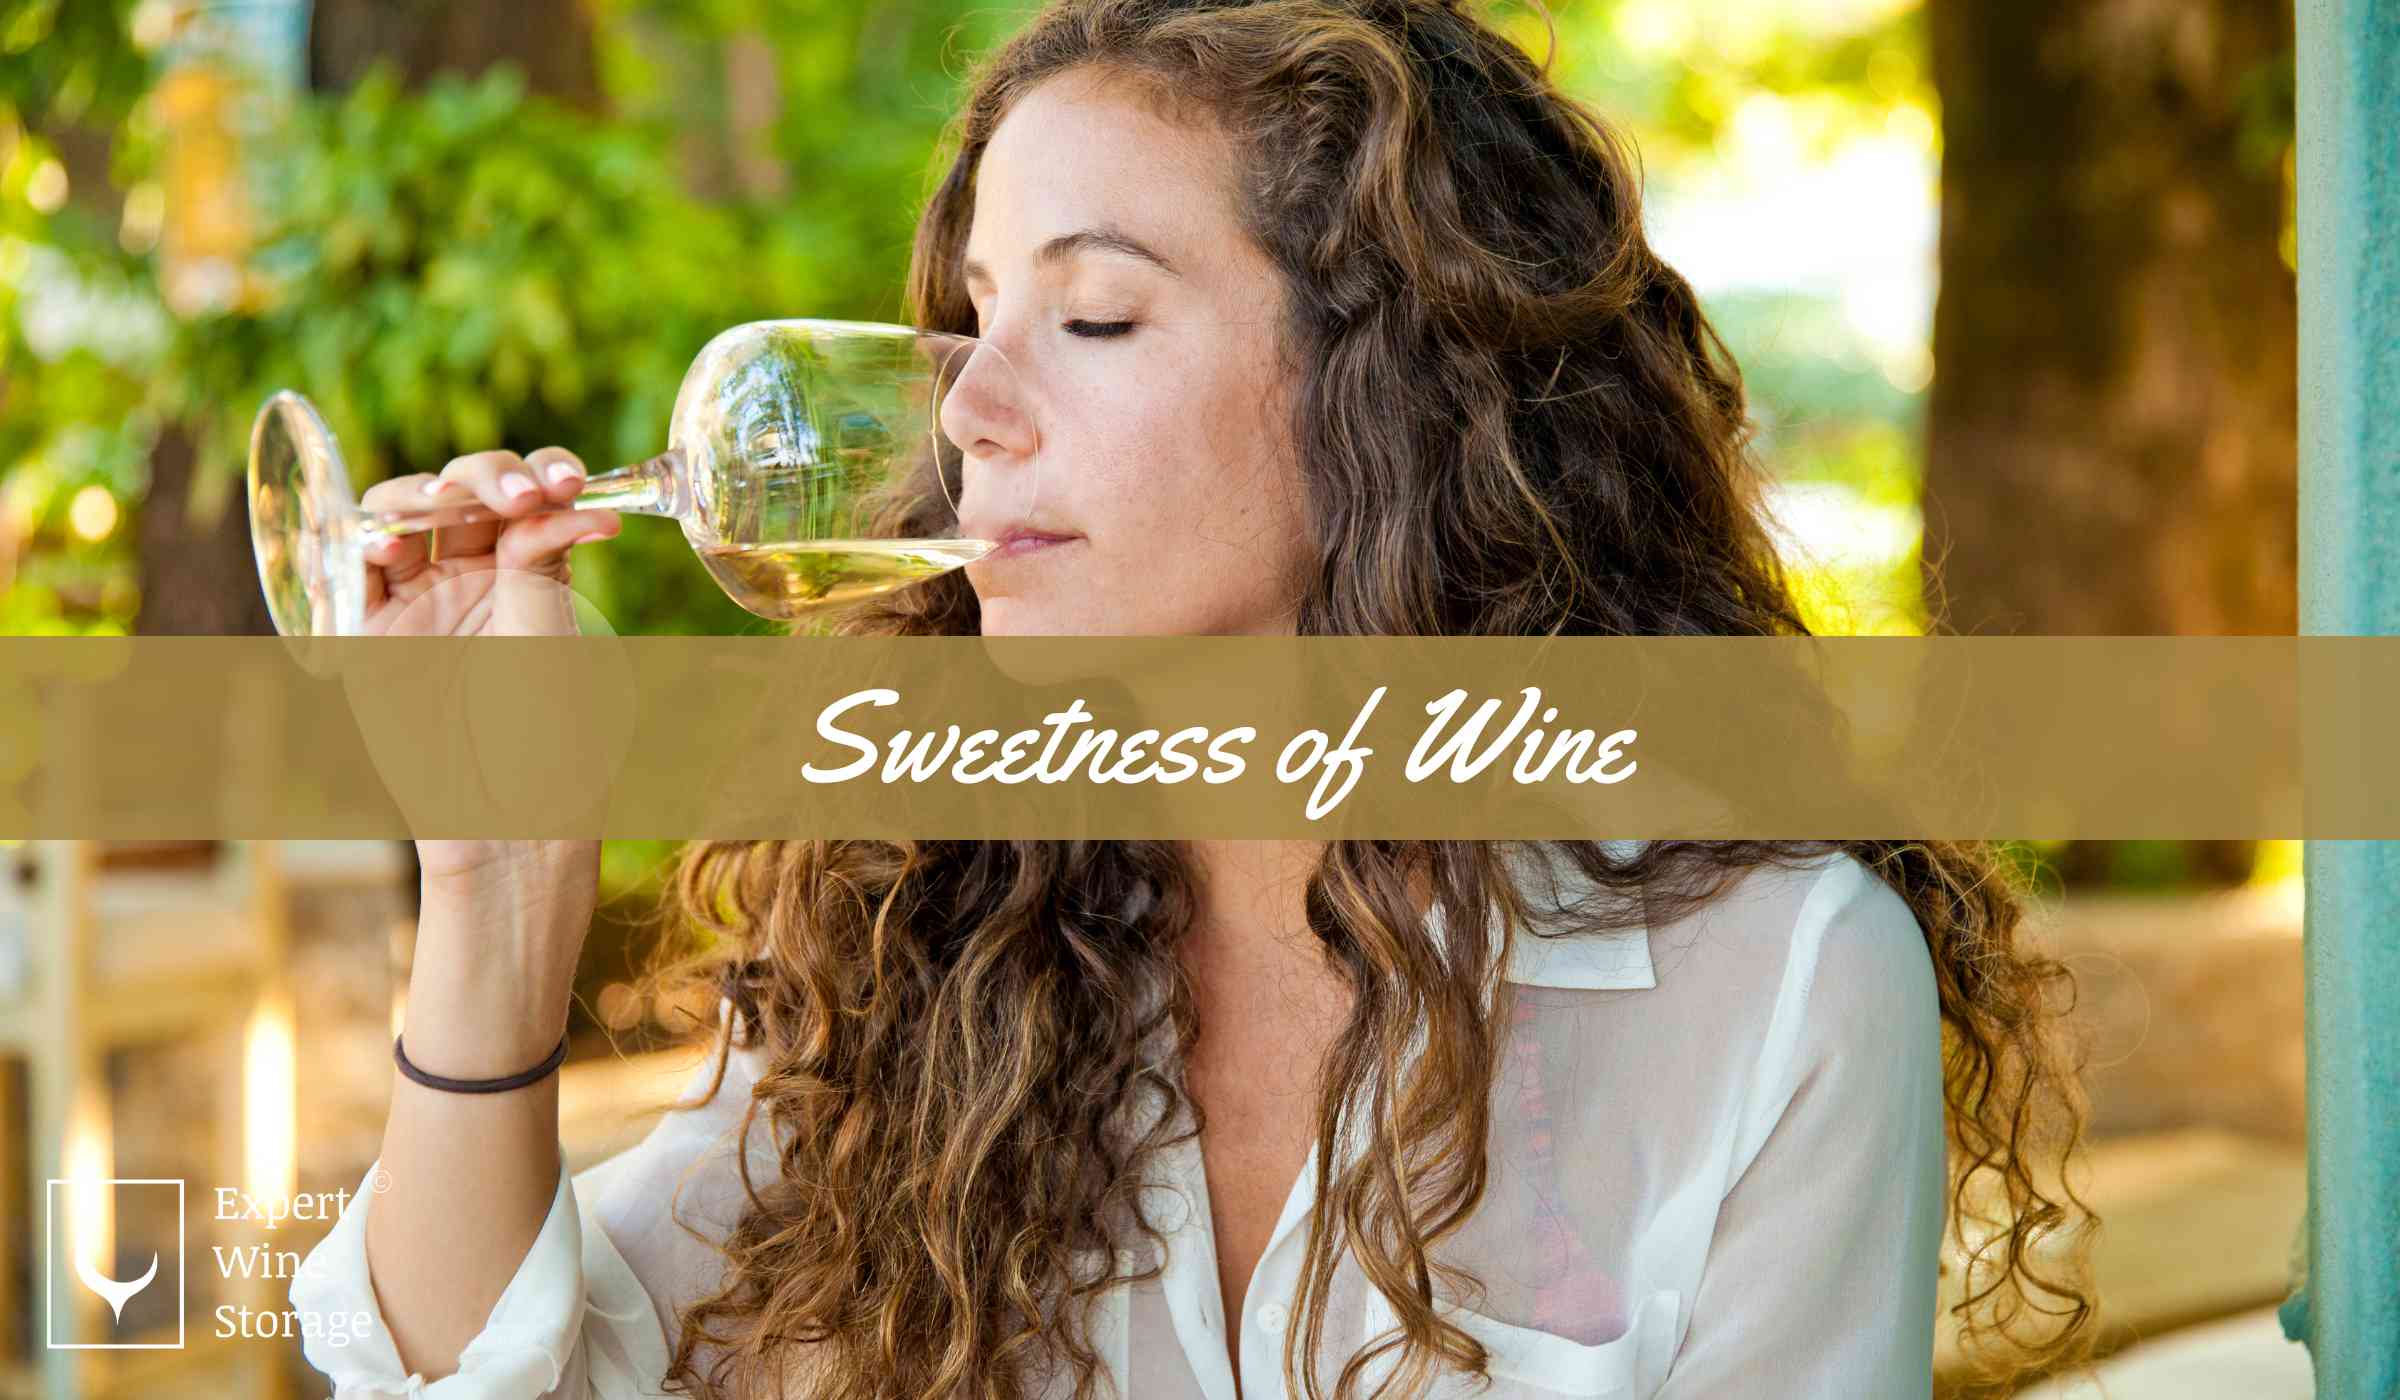 Tasting The Sweetness of Wine